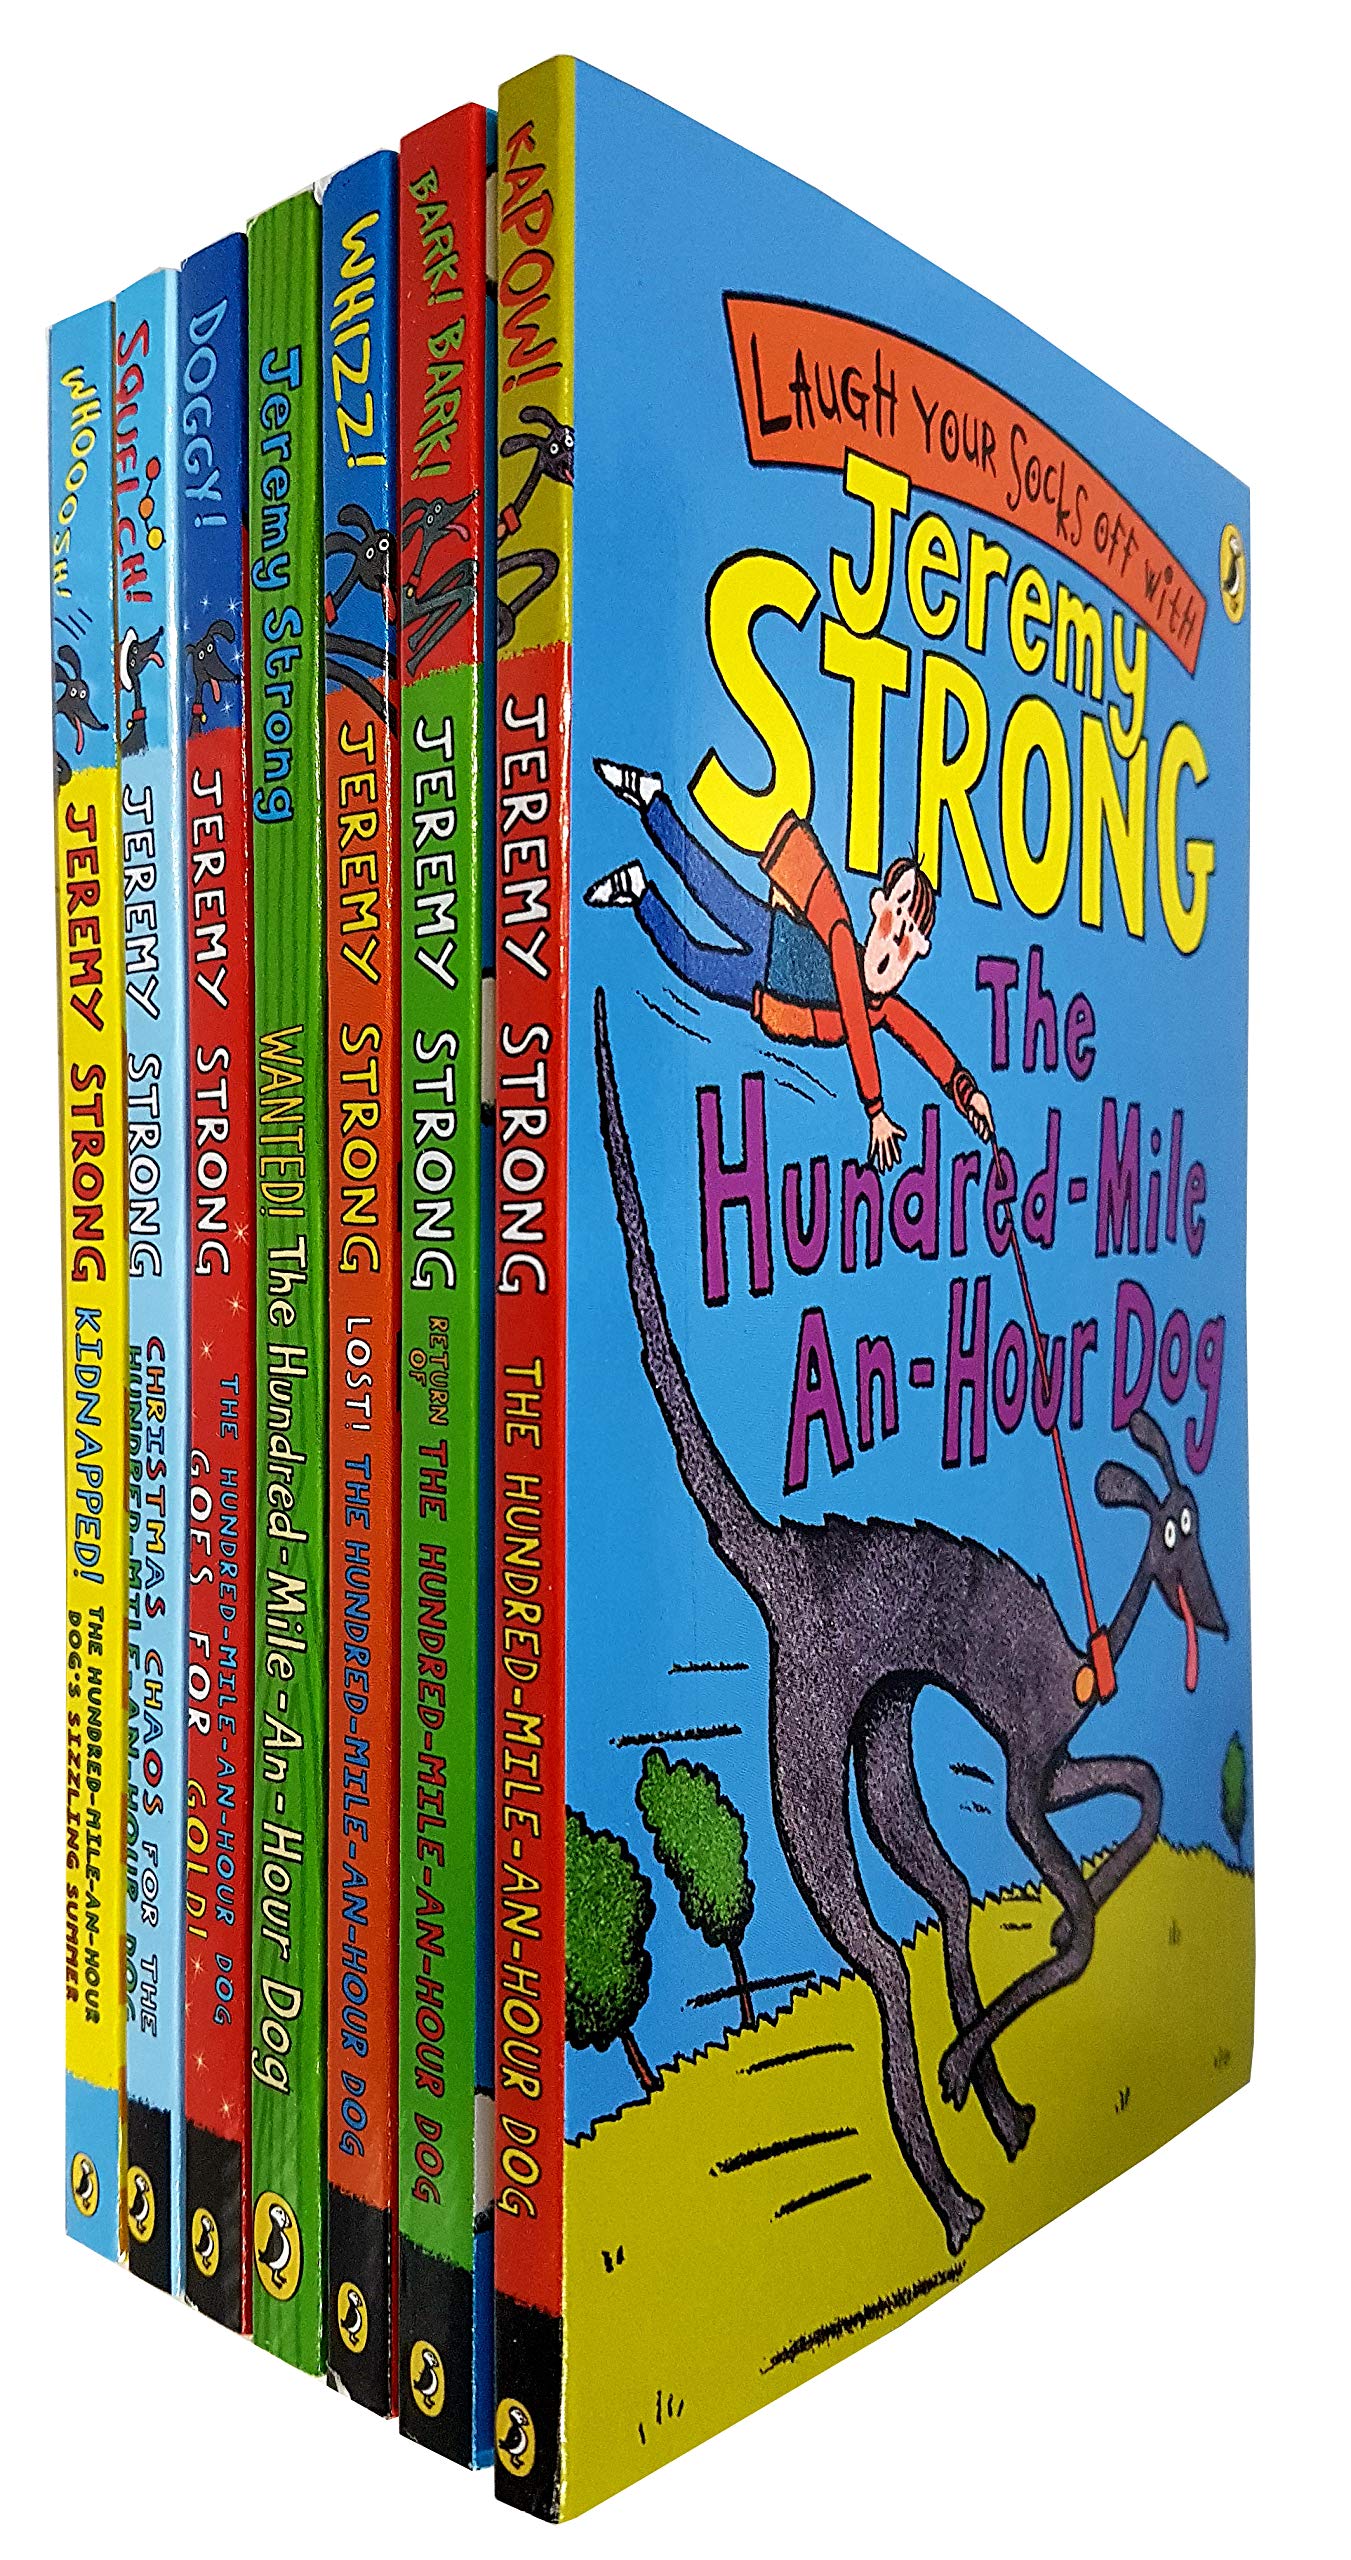 Jeremy Strong Complete Hundred Mile  Hour Dog 7 Books Collection Set Paperback - Lets Buy Books